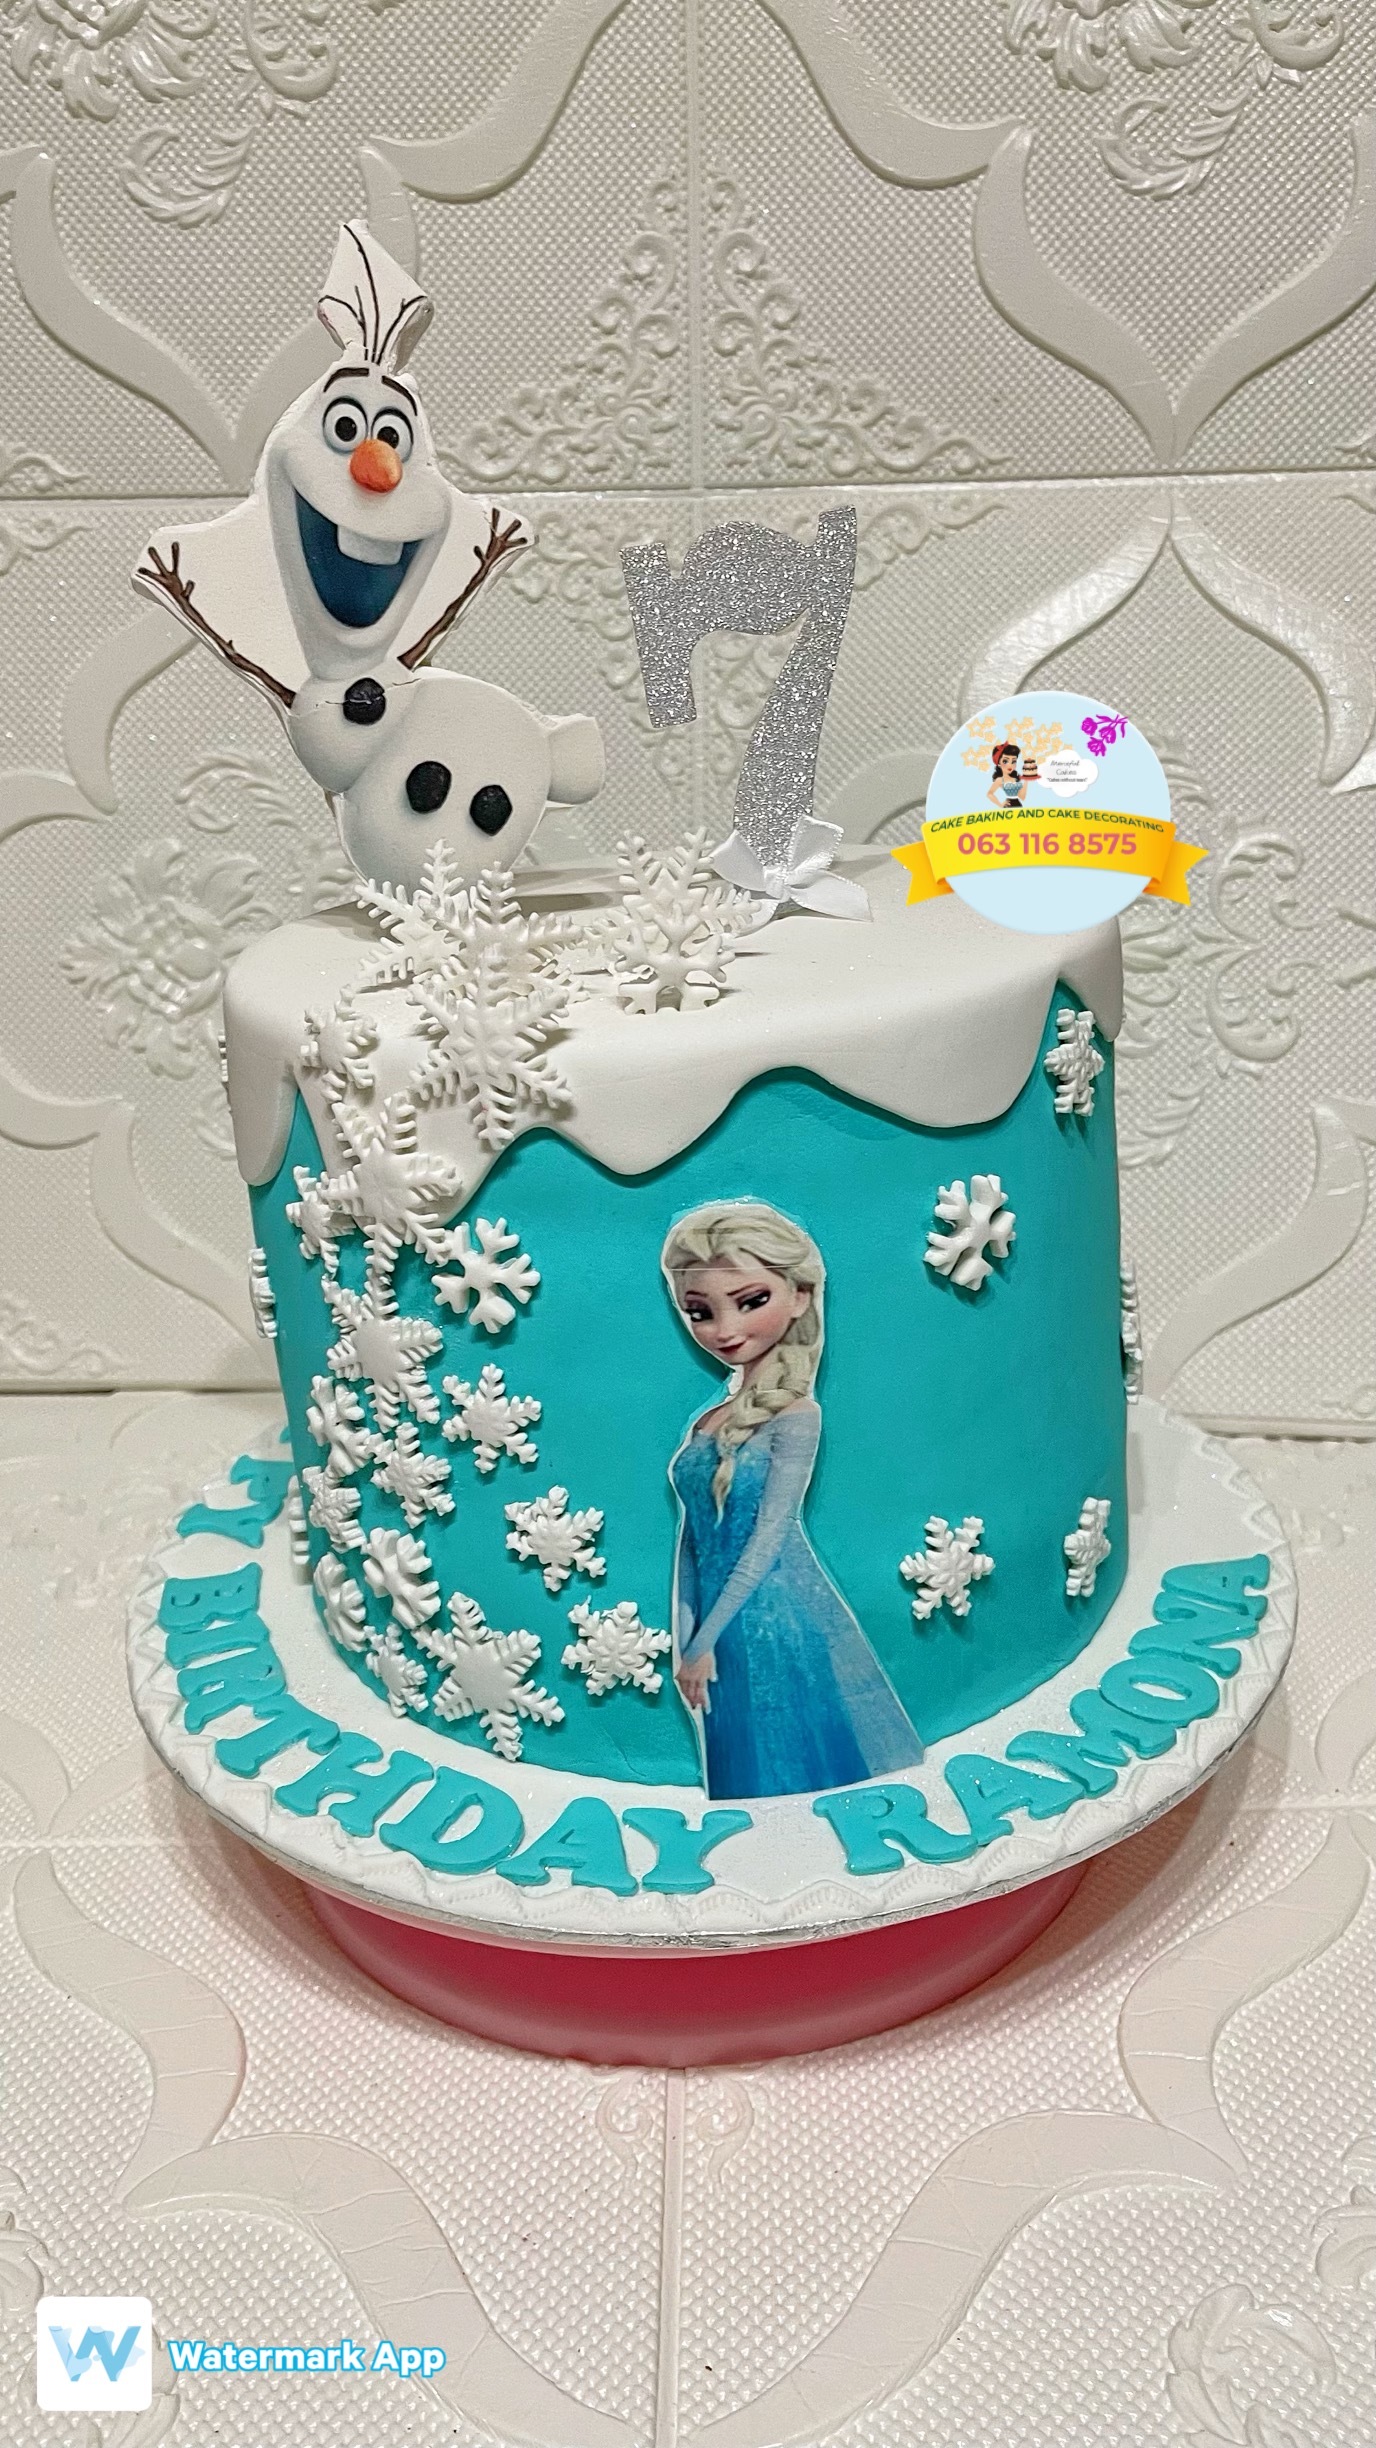 Frozen Theme Cake 07, - Just Bake